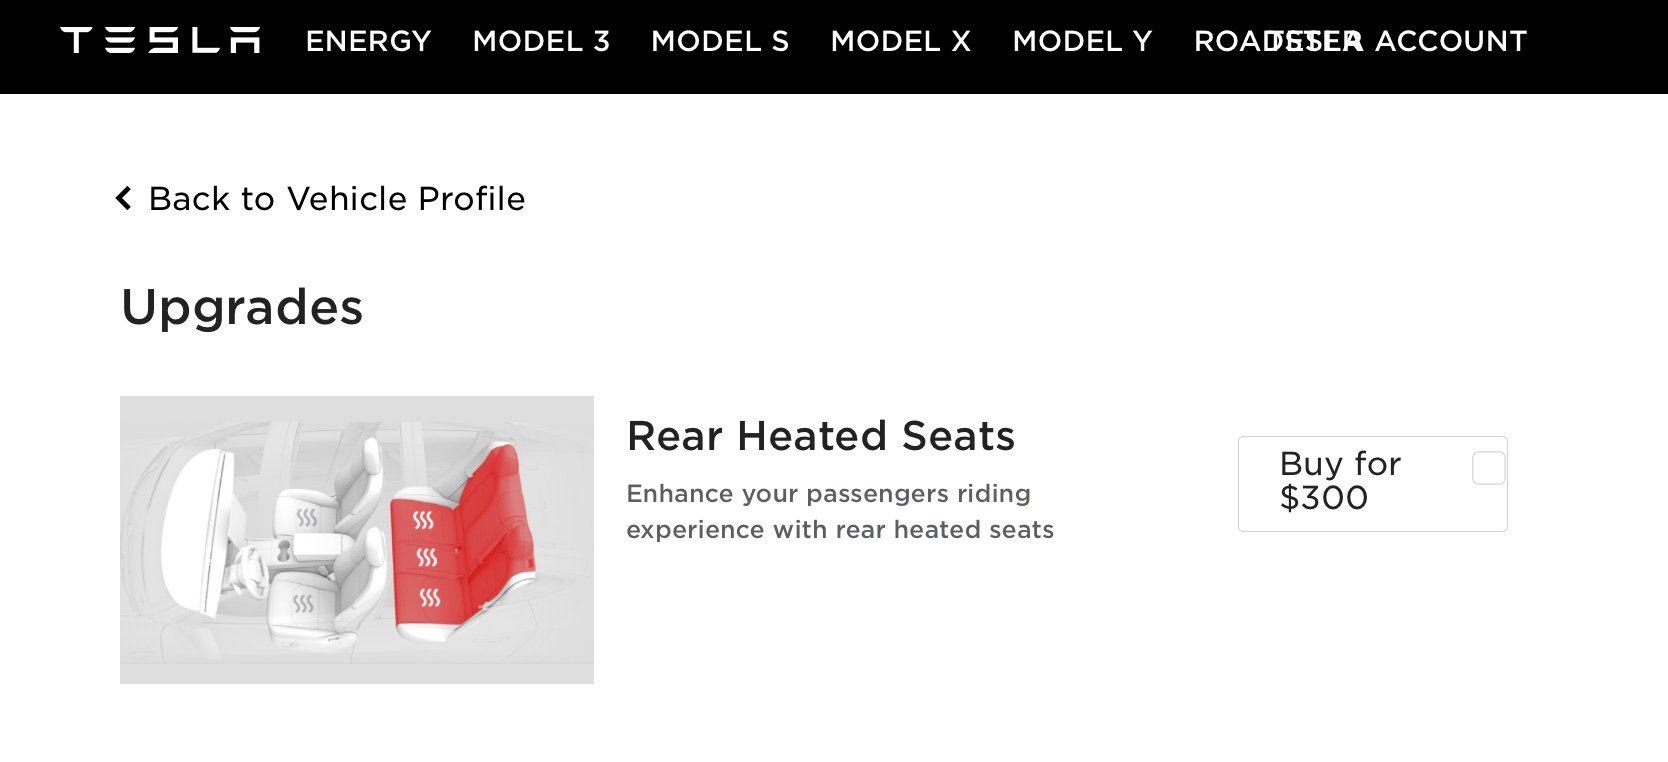 Rear heated seats upgrade